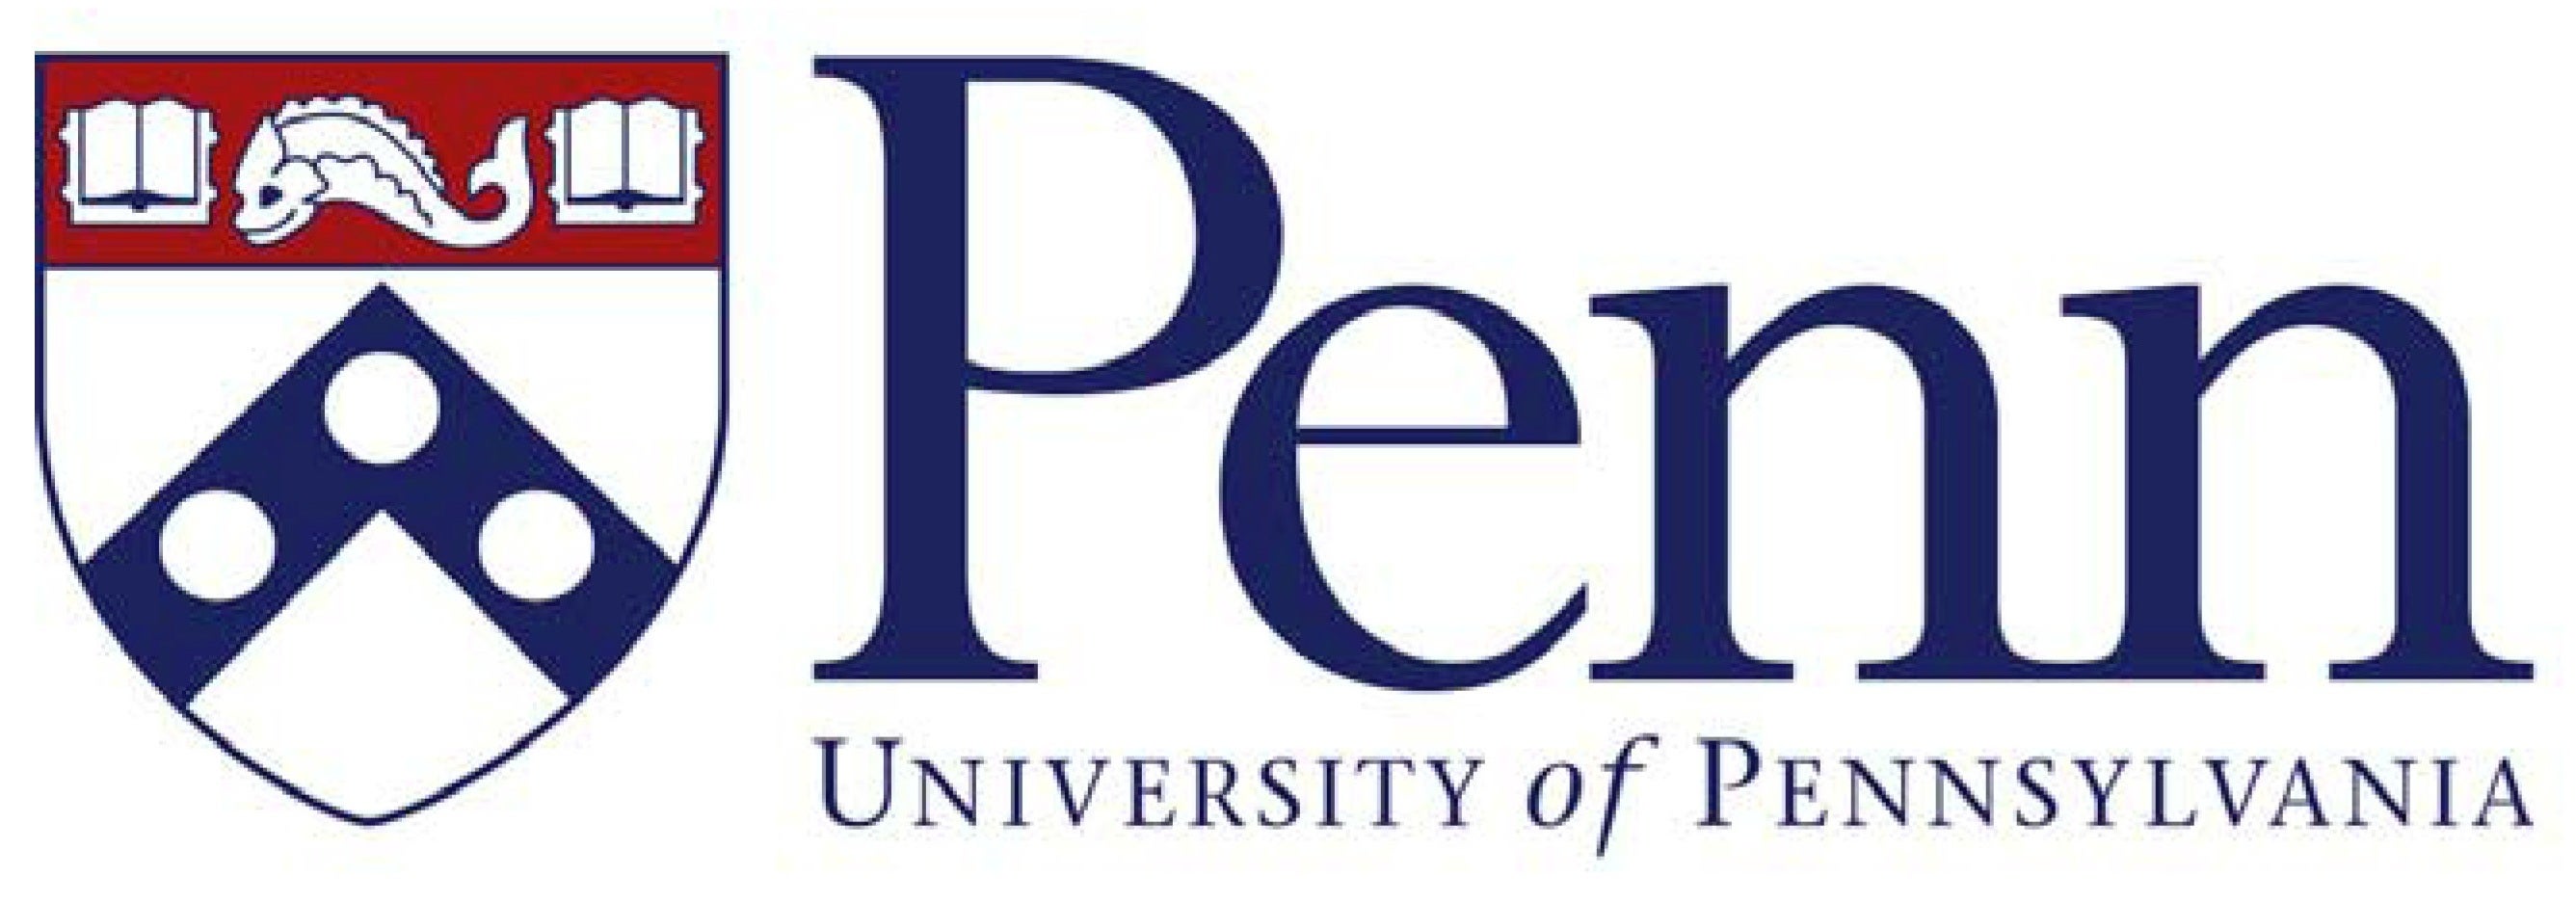 u-penn-logo